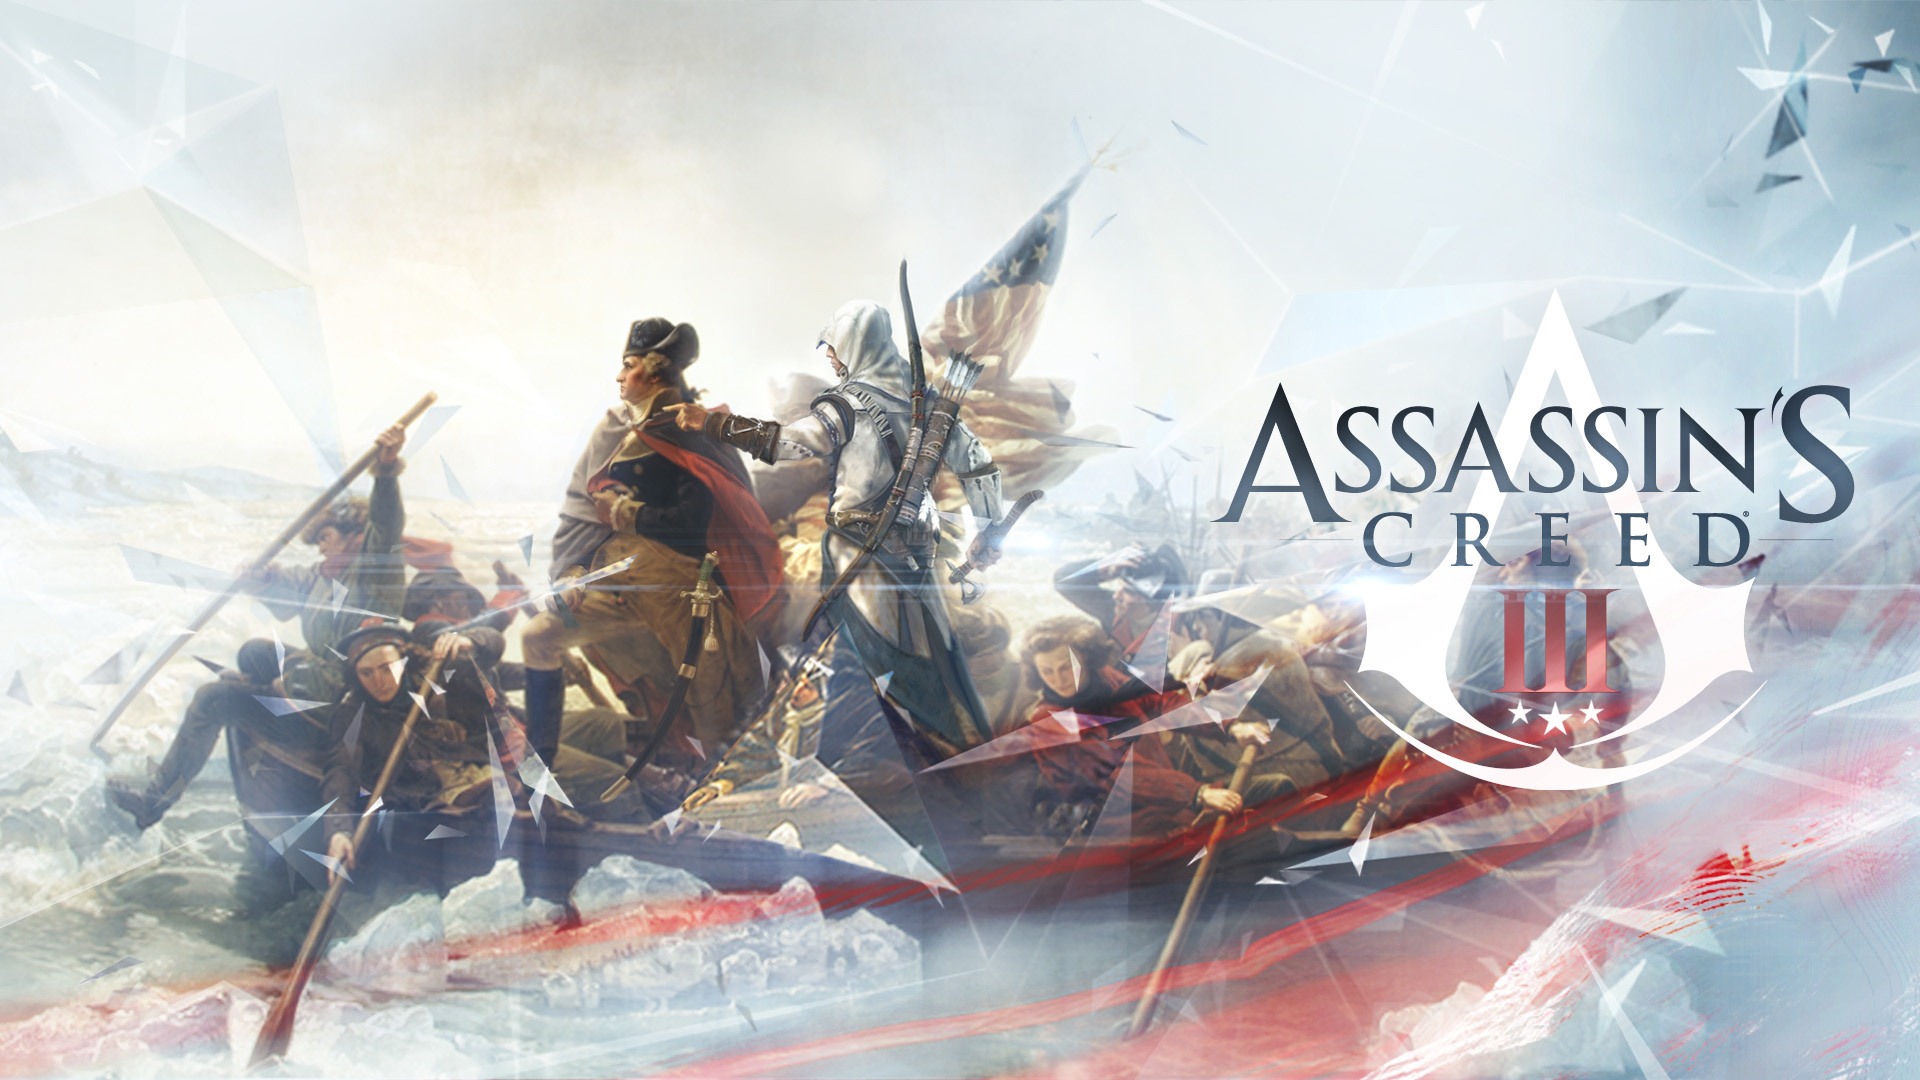 Assassins Creed III HD Wallpaper #4 - 1920x1080